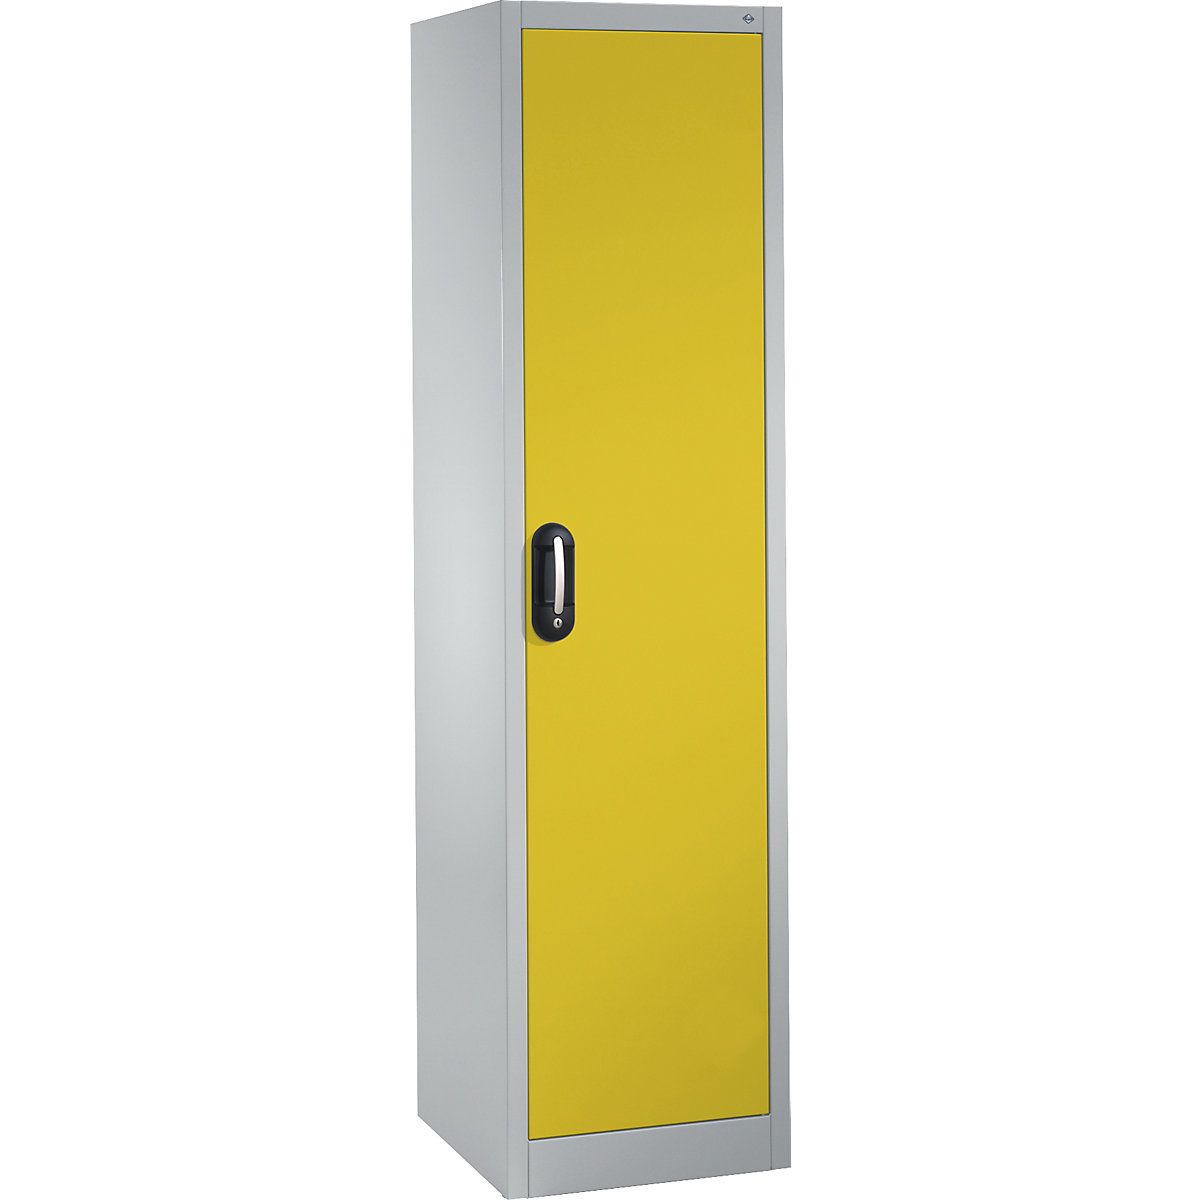 C+P – ACURADO universal cupboard, WxD 500 x 500 mm, light grey / sun yellow